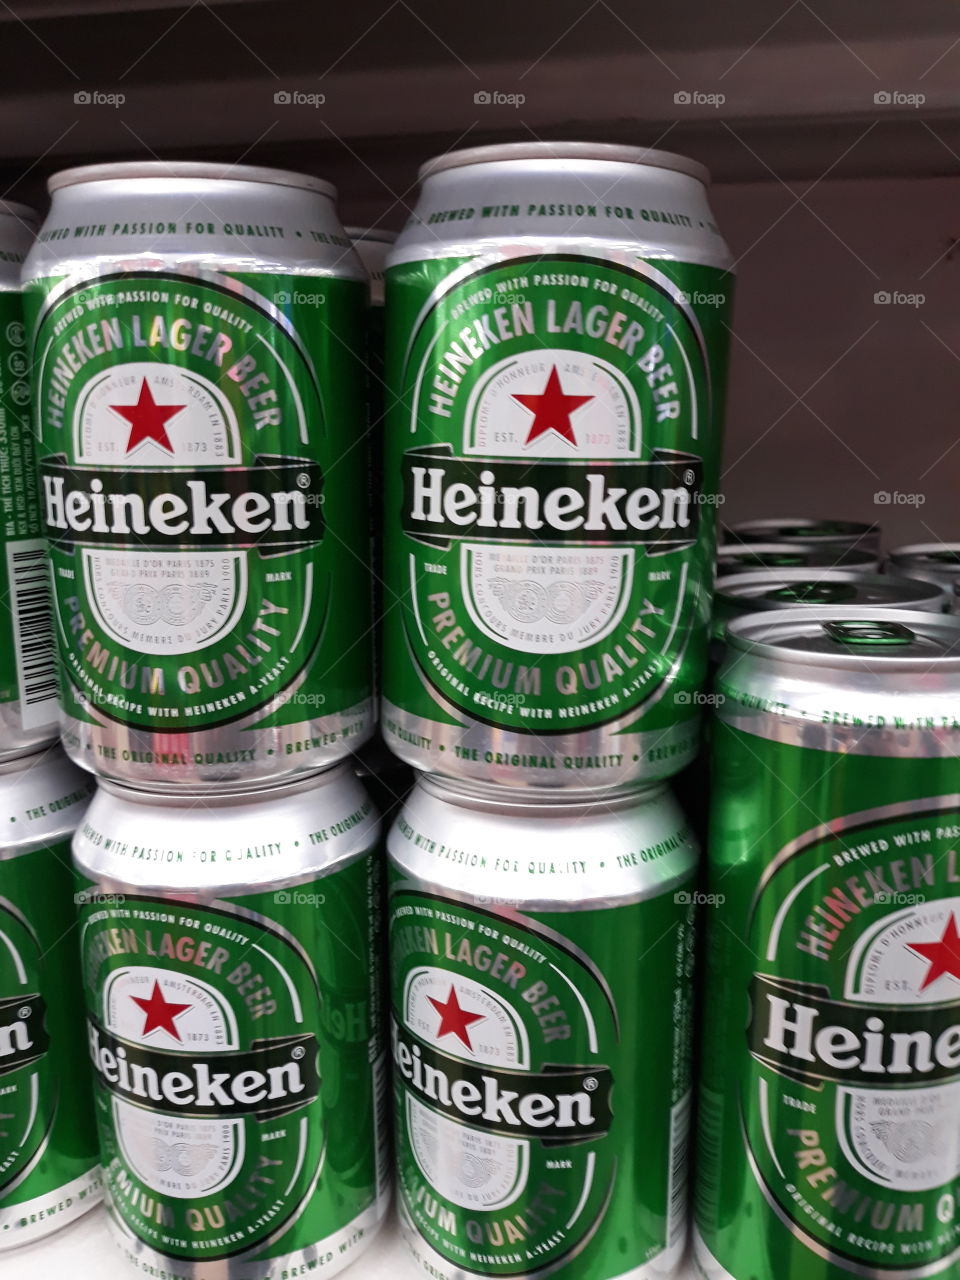 Real life and Heineken 0.0